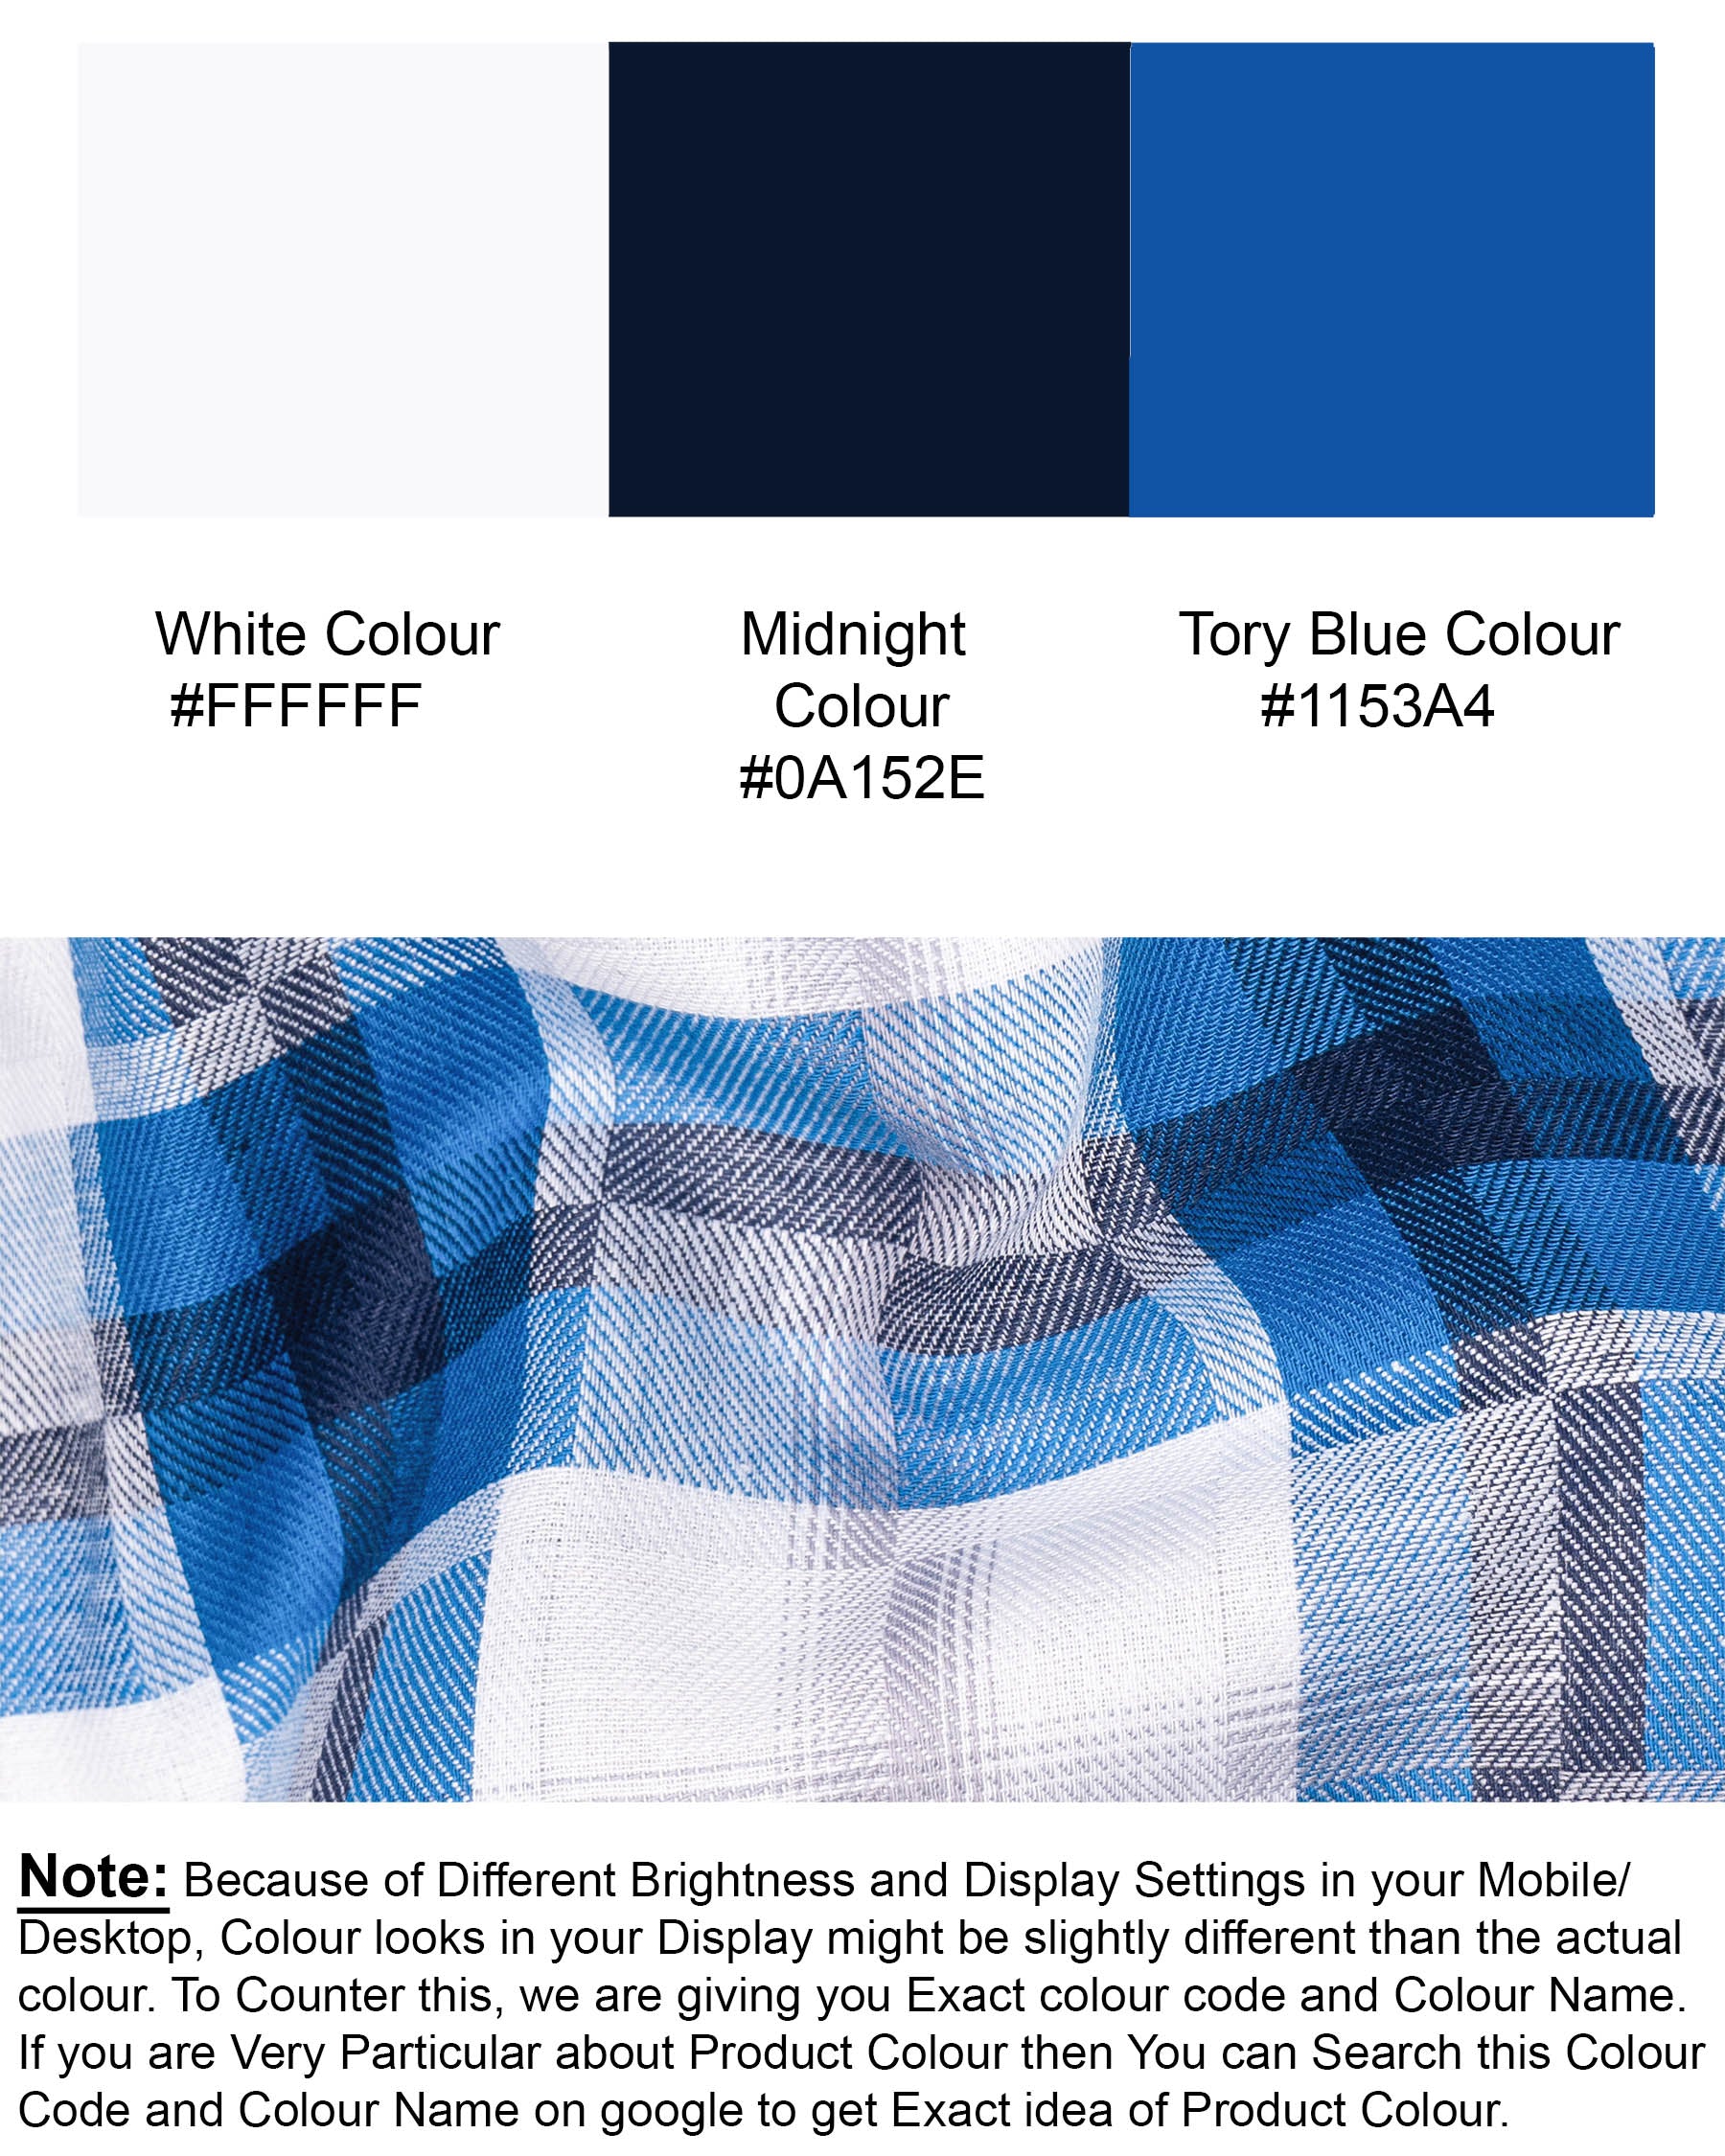 Bright white and Tory Blue Checkered Premium Cotton Shirt 6289-BLK-38, 6289-BLK-H-38, 6289-BLK-39, 6289-BLK-H-39, 6289-BLK-40, 6289-BLK-H-40, 6289-BLK-42, 6289-BLK-H-42, 6289-BLK-44, 6289-BLK-H-44, 6289-BLK-46, 6289-BLK-H-46, 6289-BLK-48, 6289-BLK-H-48, 6289-BLK-50, 6289-BLK-H-50, 6289-BLK-52, 6289-BLK-H-52